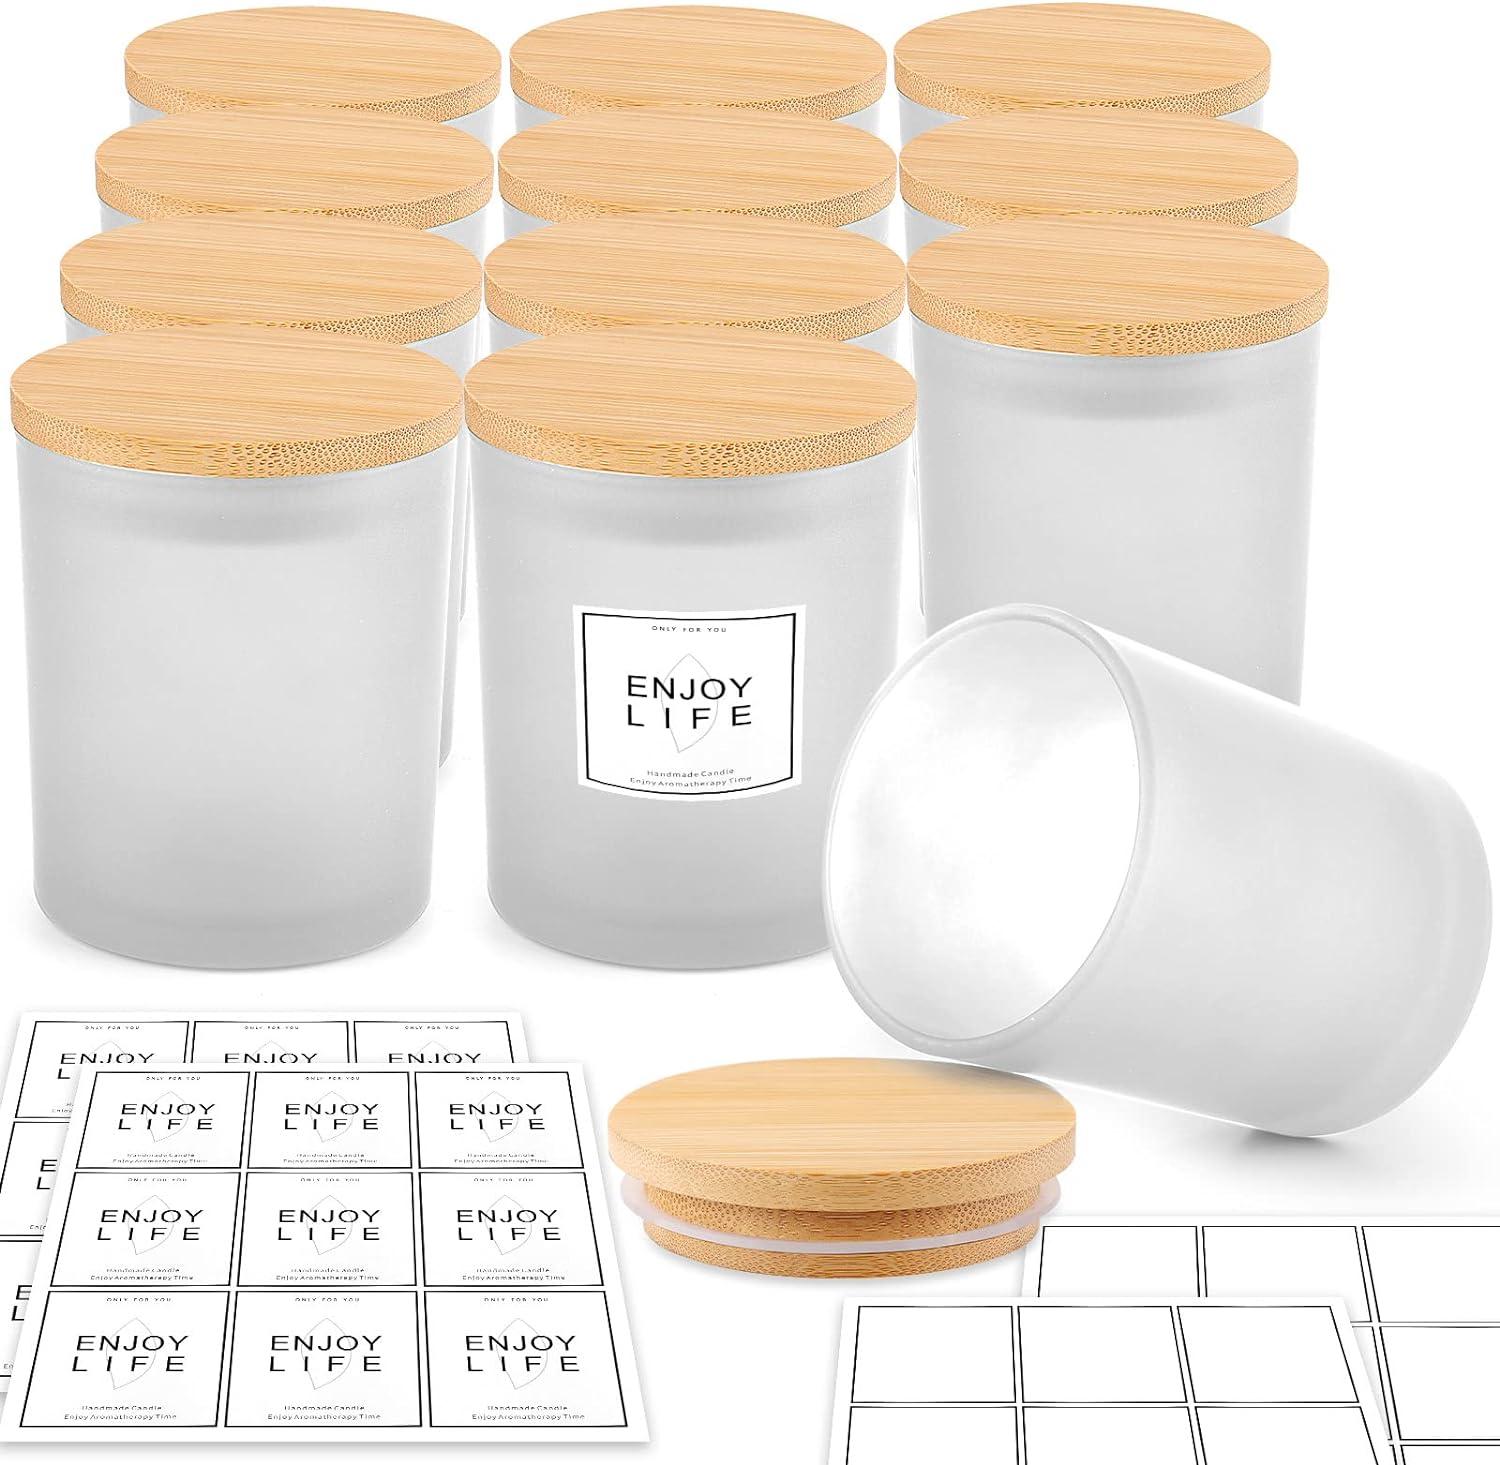 6oz Glass Jars Set with Wood Airtight Lids Small Food Storage